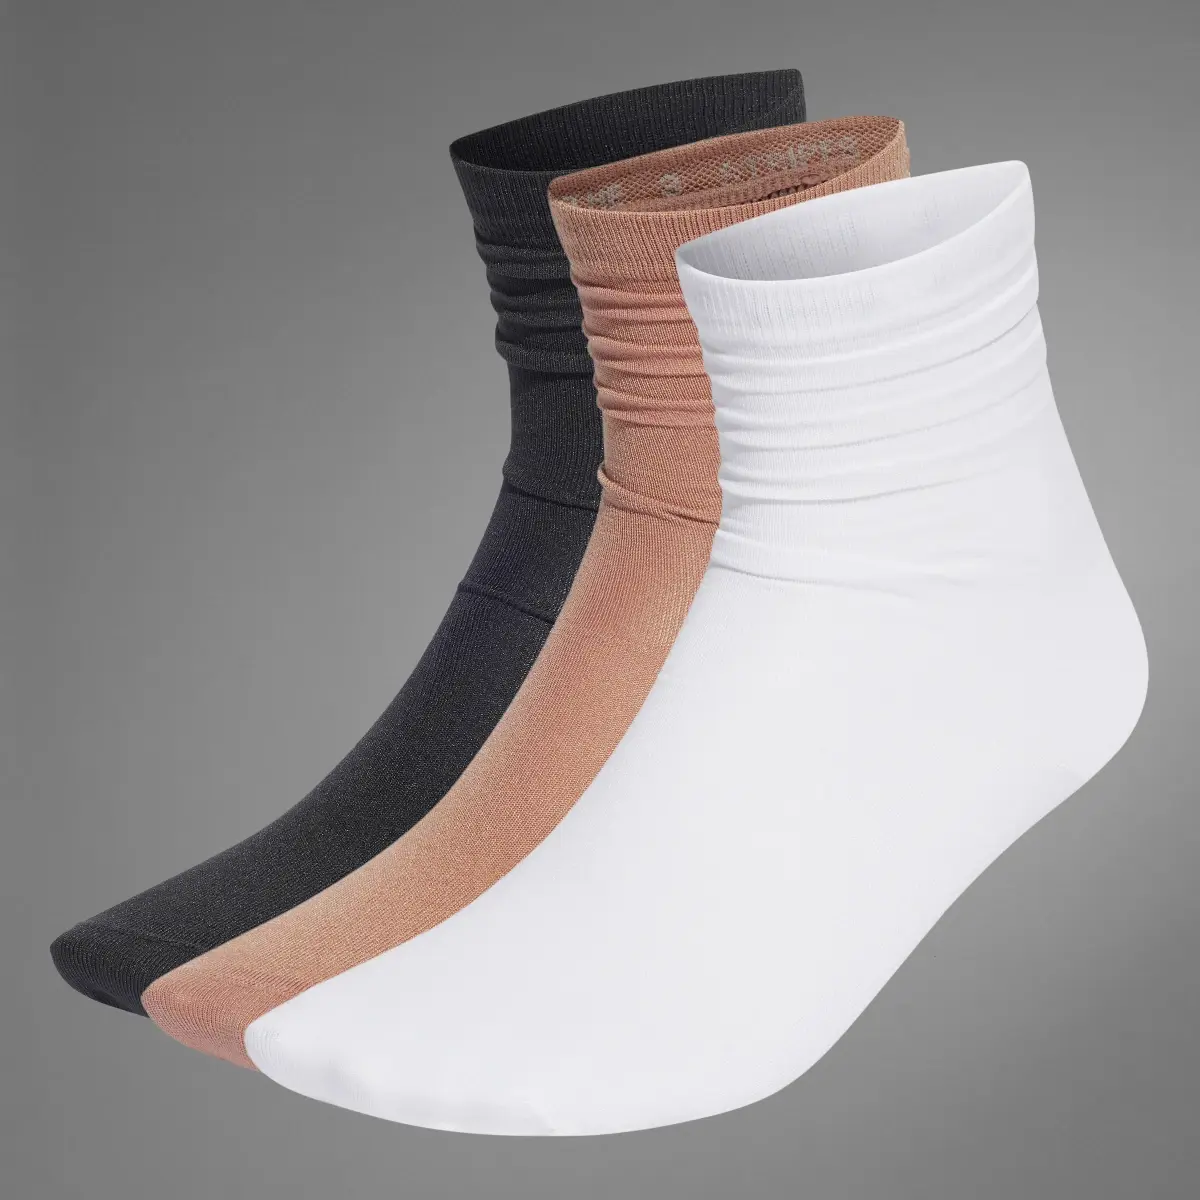 Adidas Collective Power Mid-Cut Bilekli Çorap - 3 Çift. 1